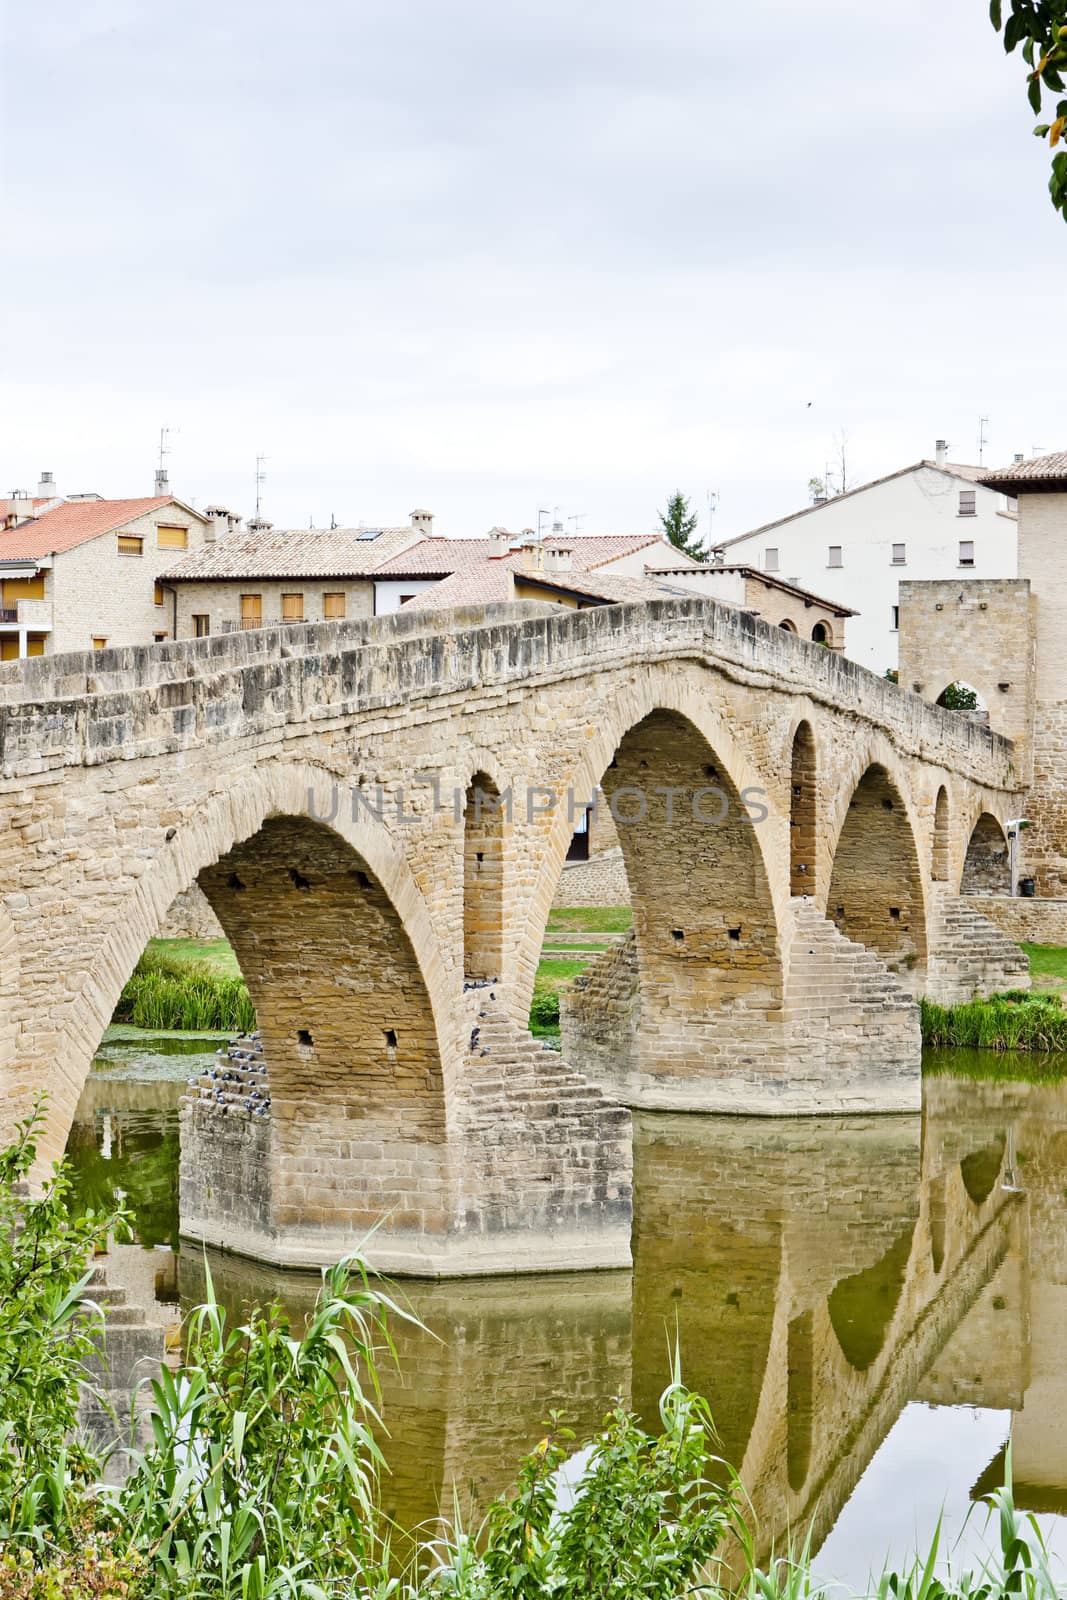 romanesque bridge over river Arga, Puente La Reina, Road to Santiago de Compostela, Navarre, Spain